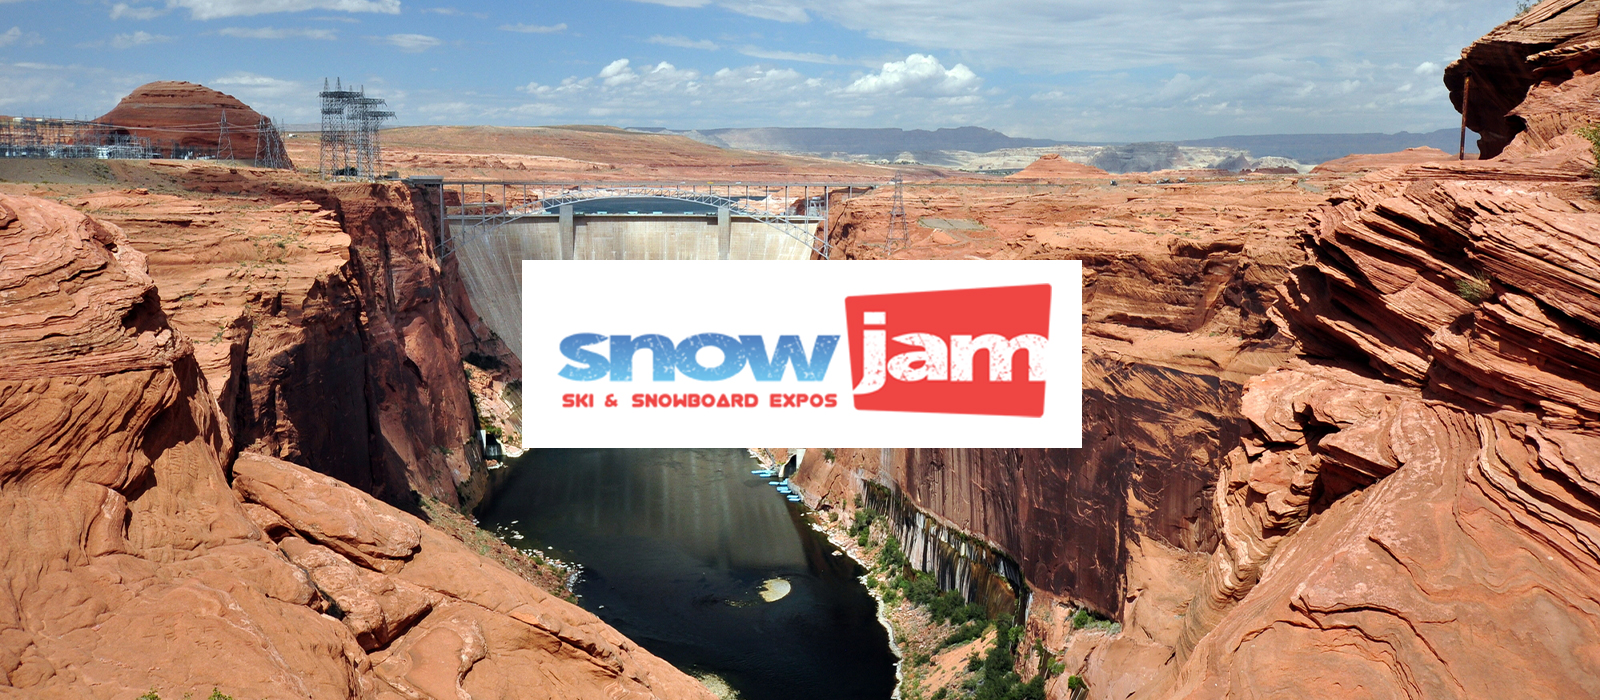 SnowJam Las Vegas Network.Vegas